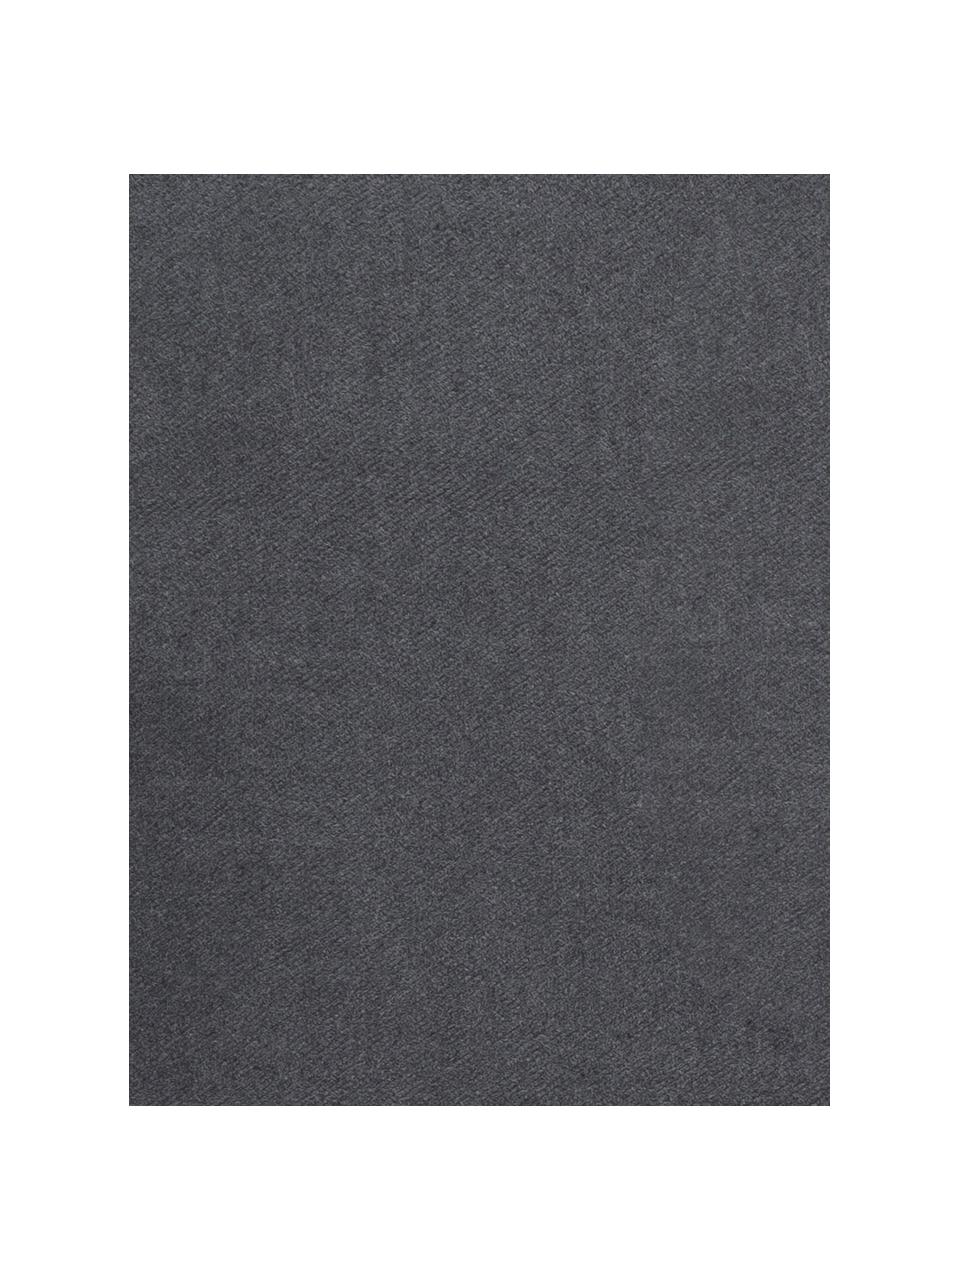 Manta de algodón Plain, 50% algodón, 50% acrílico, Gris oscuro, An 140 x L 180 cm